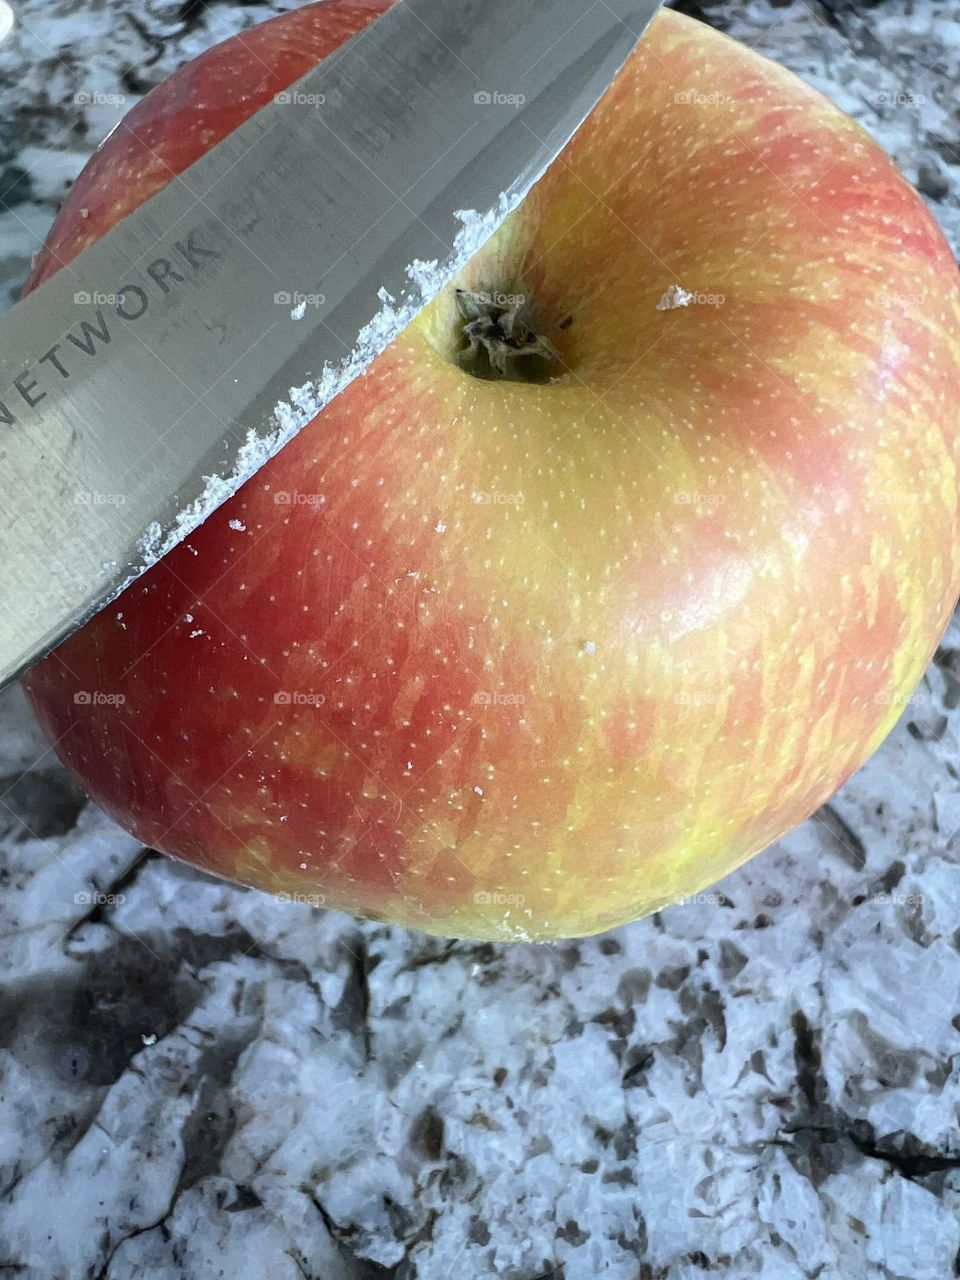 Wax off of an organic Apple